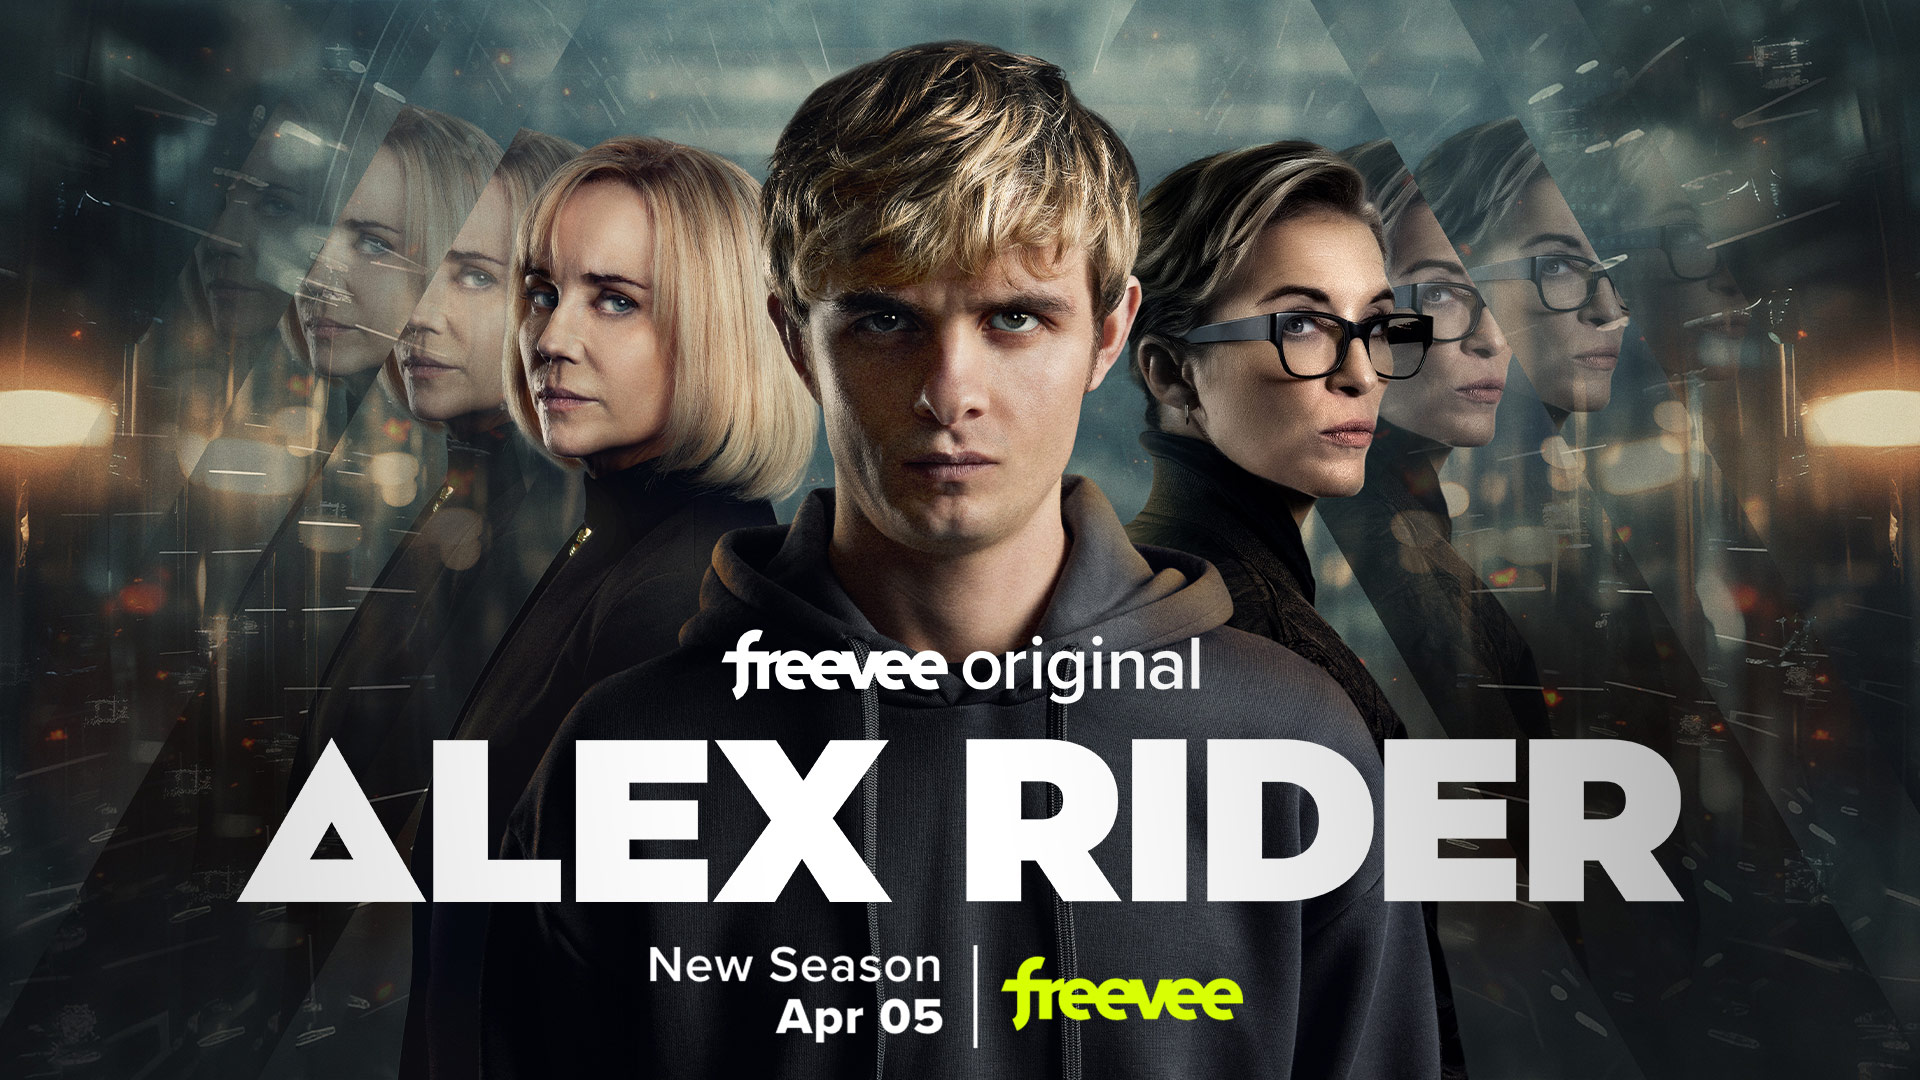 Alex rider season 3